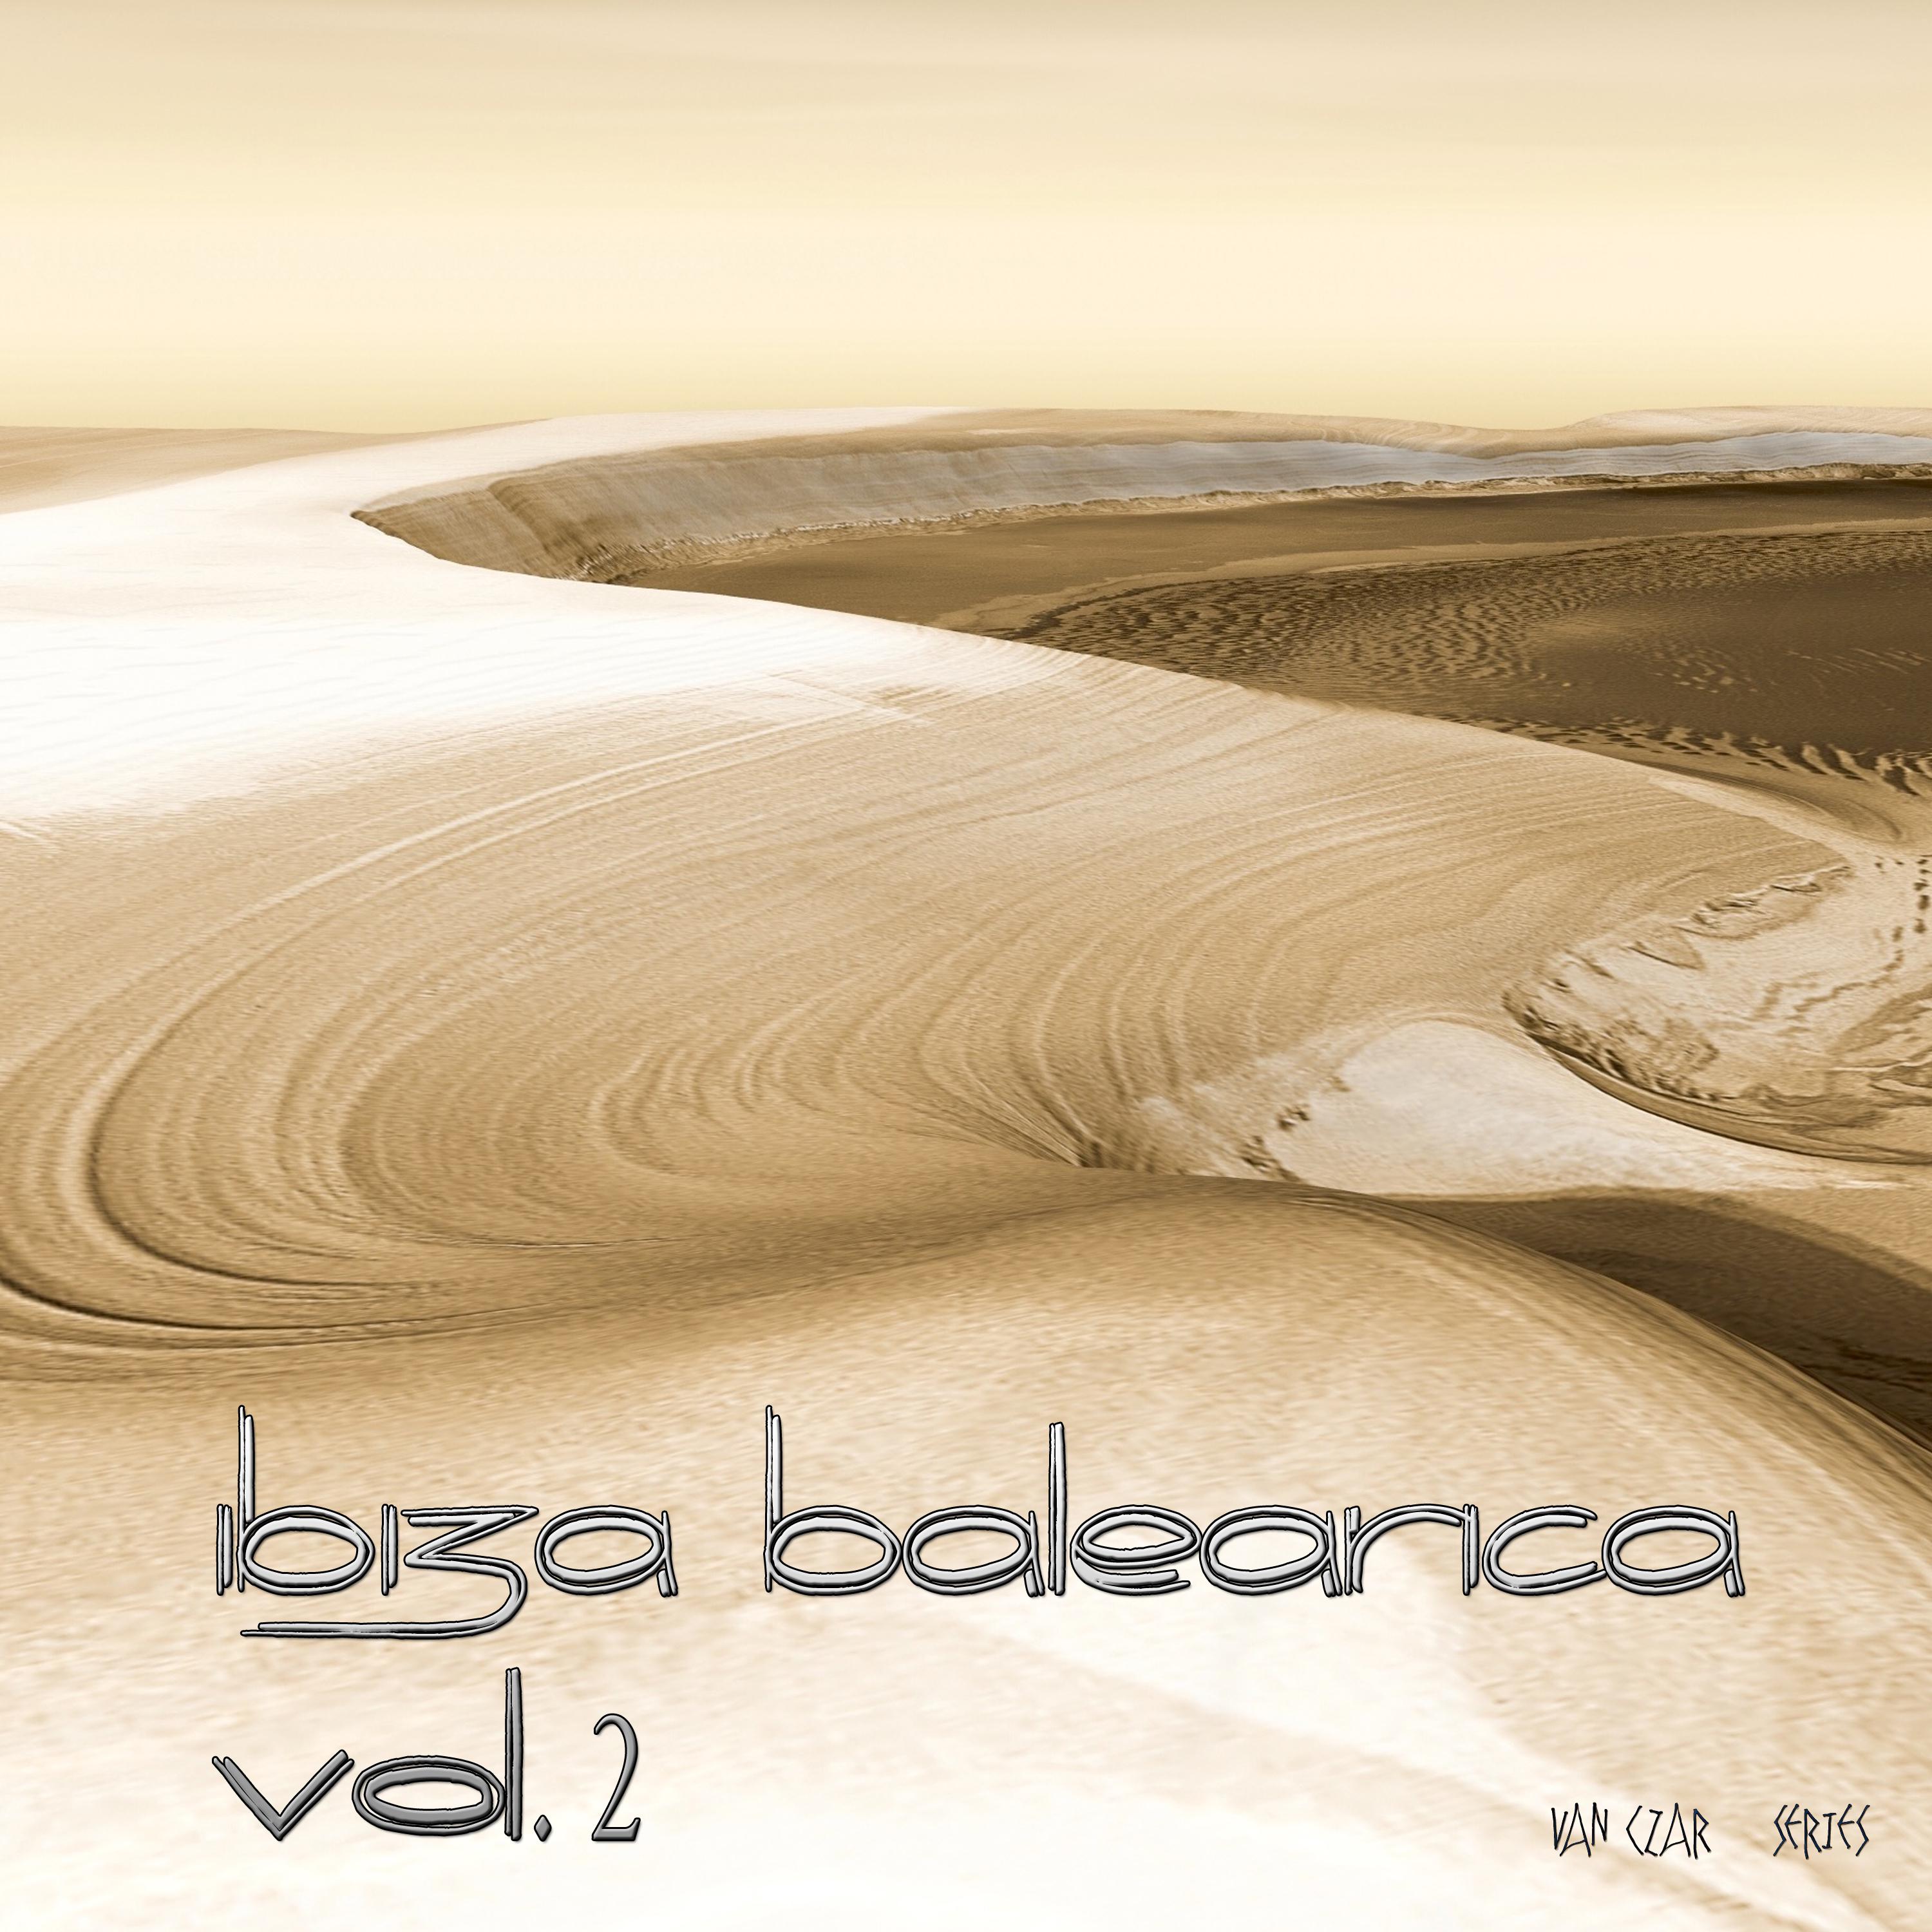 Ibiza Balearica, Vol. 2 (Selected & Mixed By Van Czar) [Continuous DJ Mix]